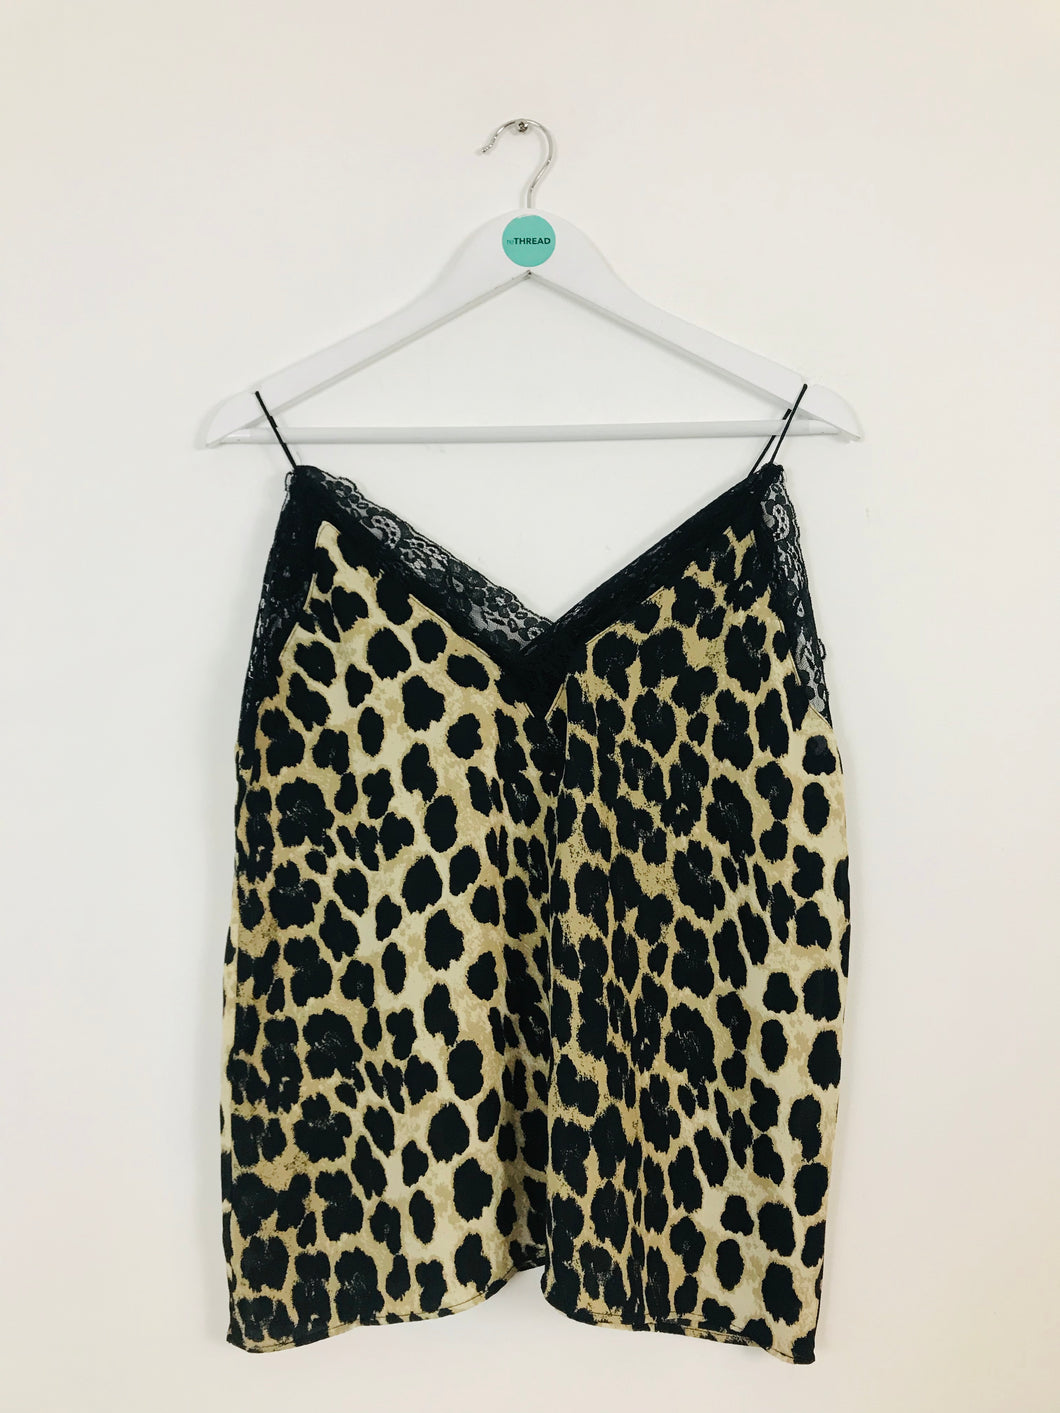 Zara Women’s Leopard Print Lace Camisole Top | S | Brown